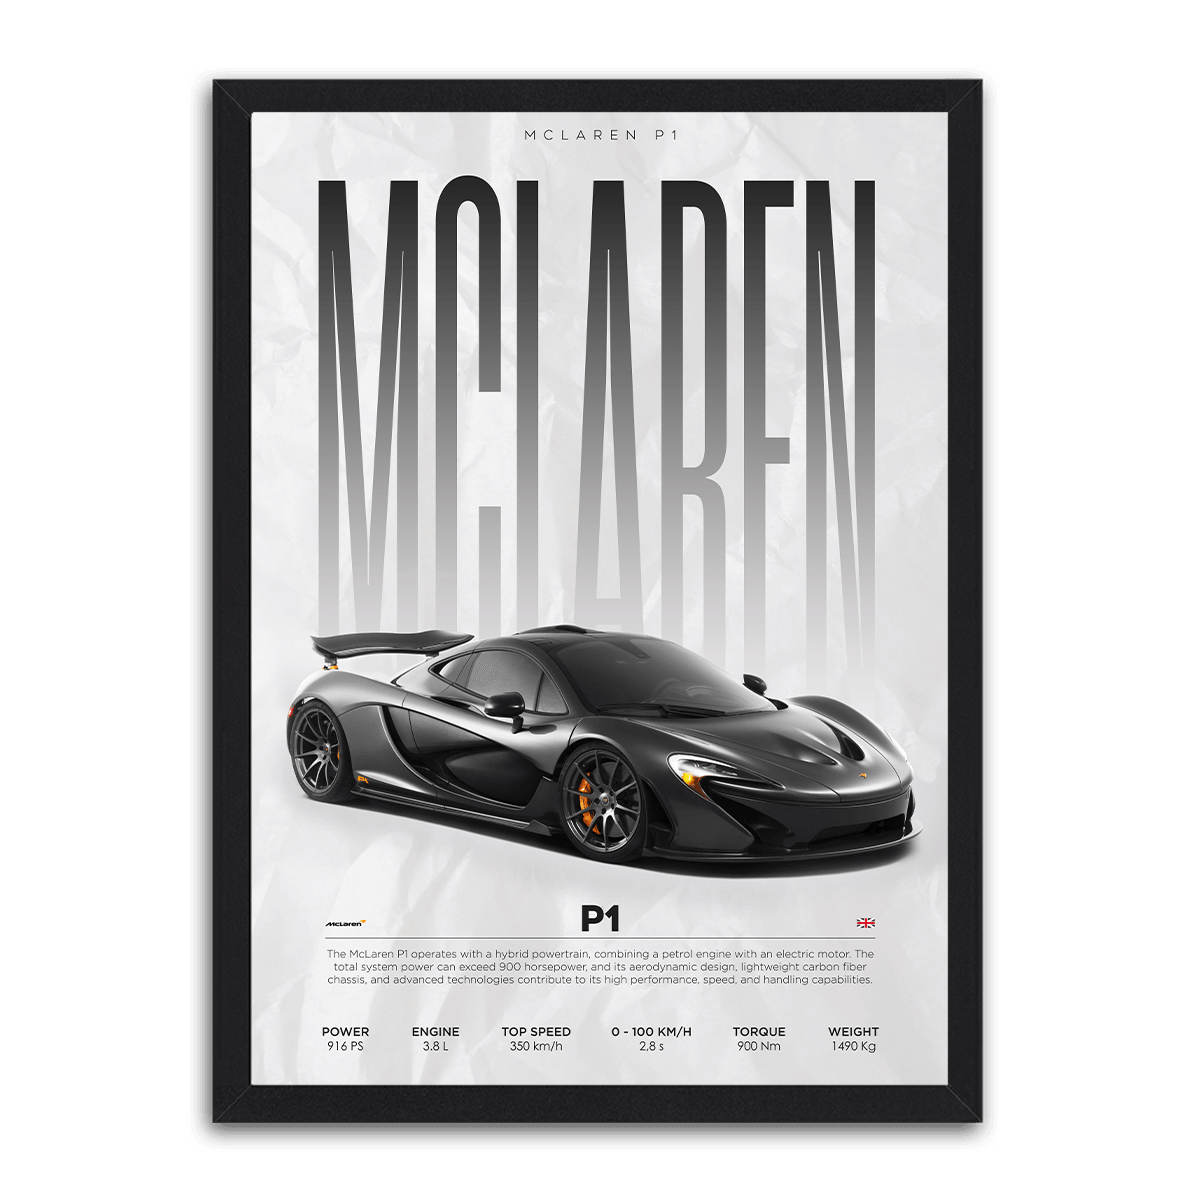 McLaren P1 - Apex of Engineering - PixMagic